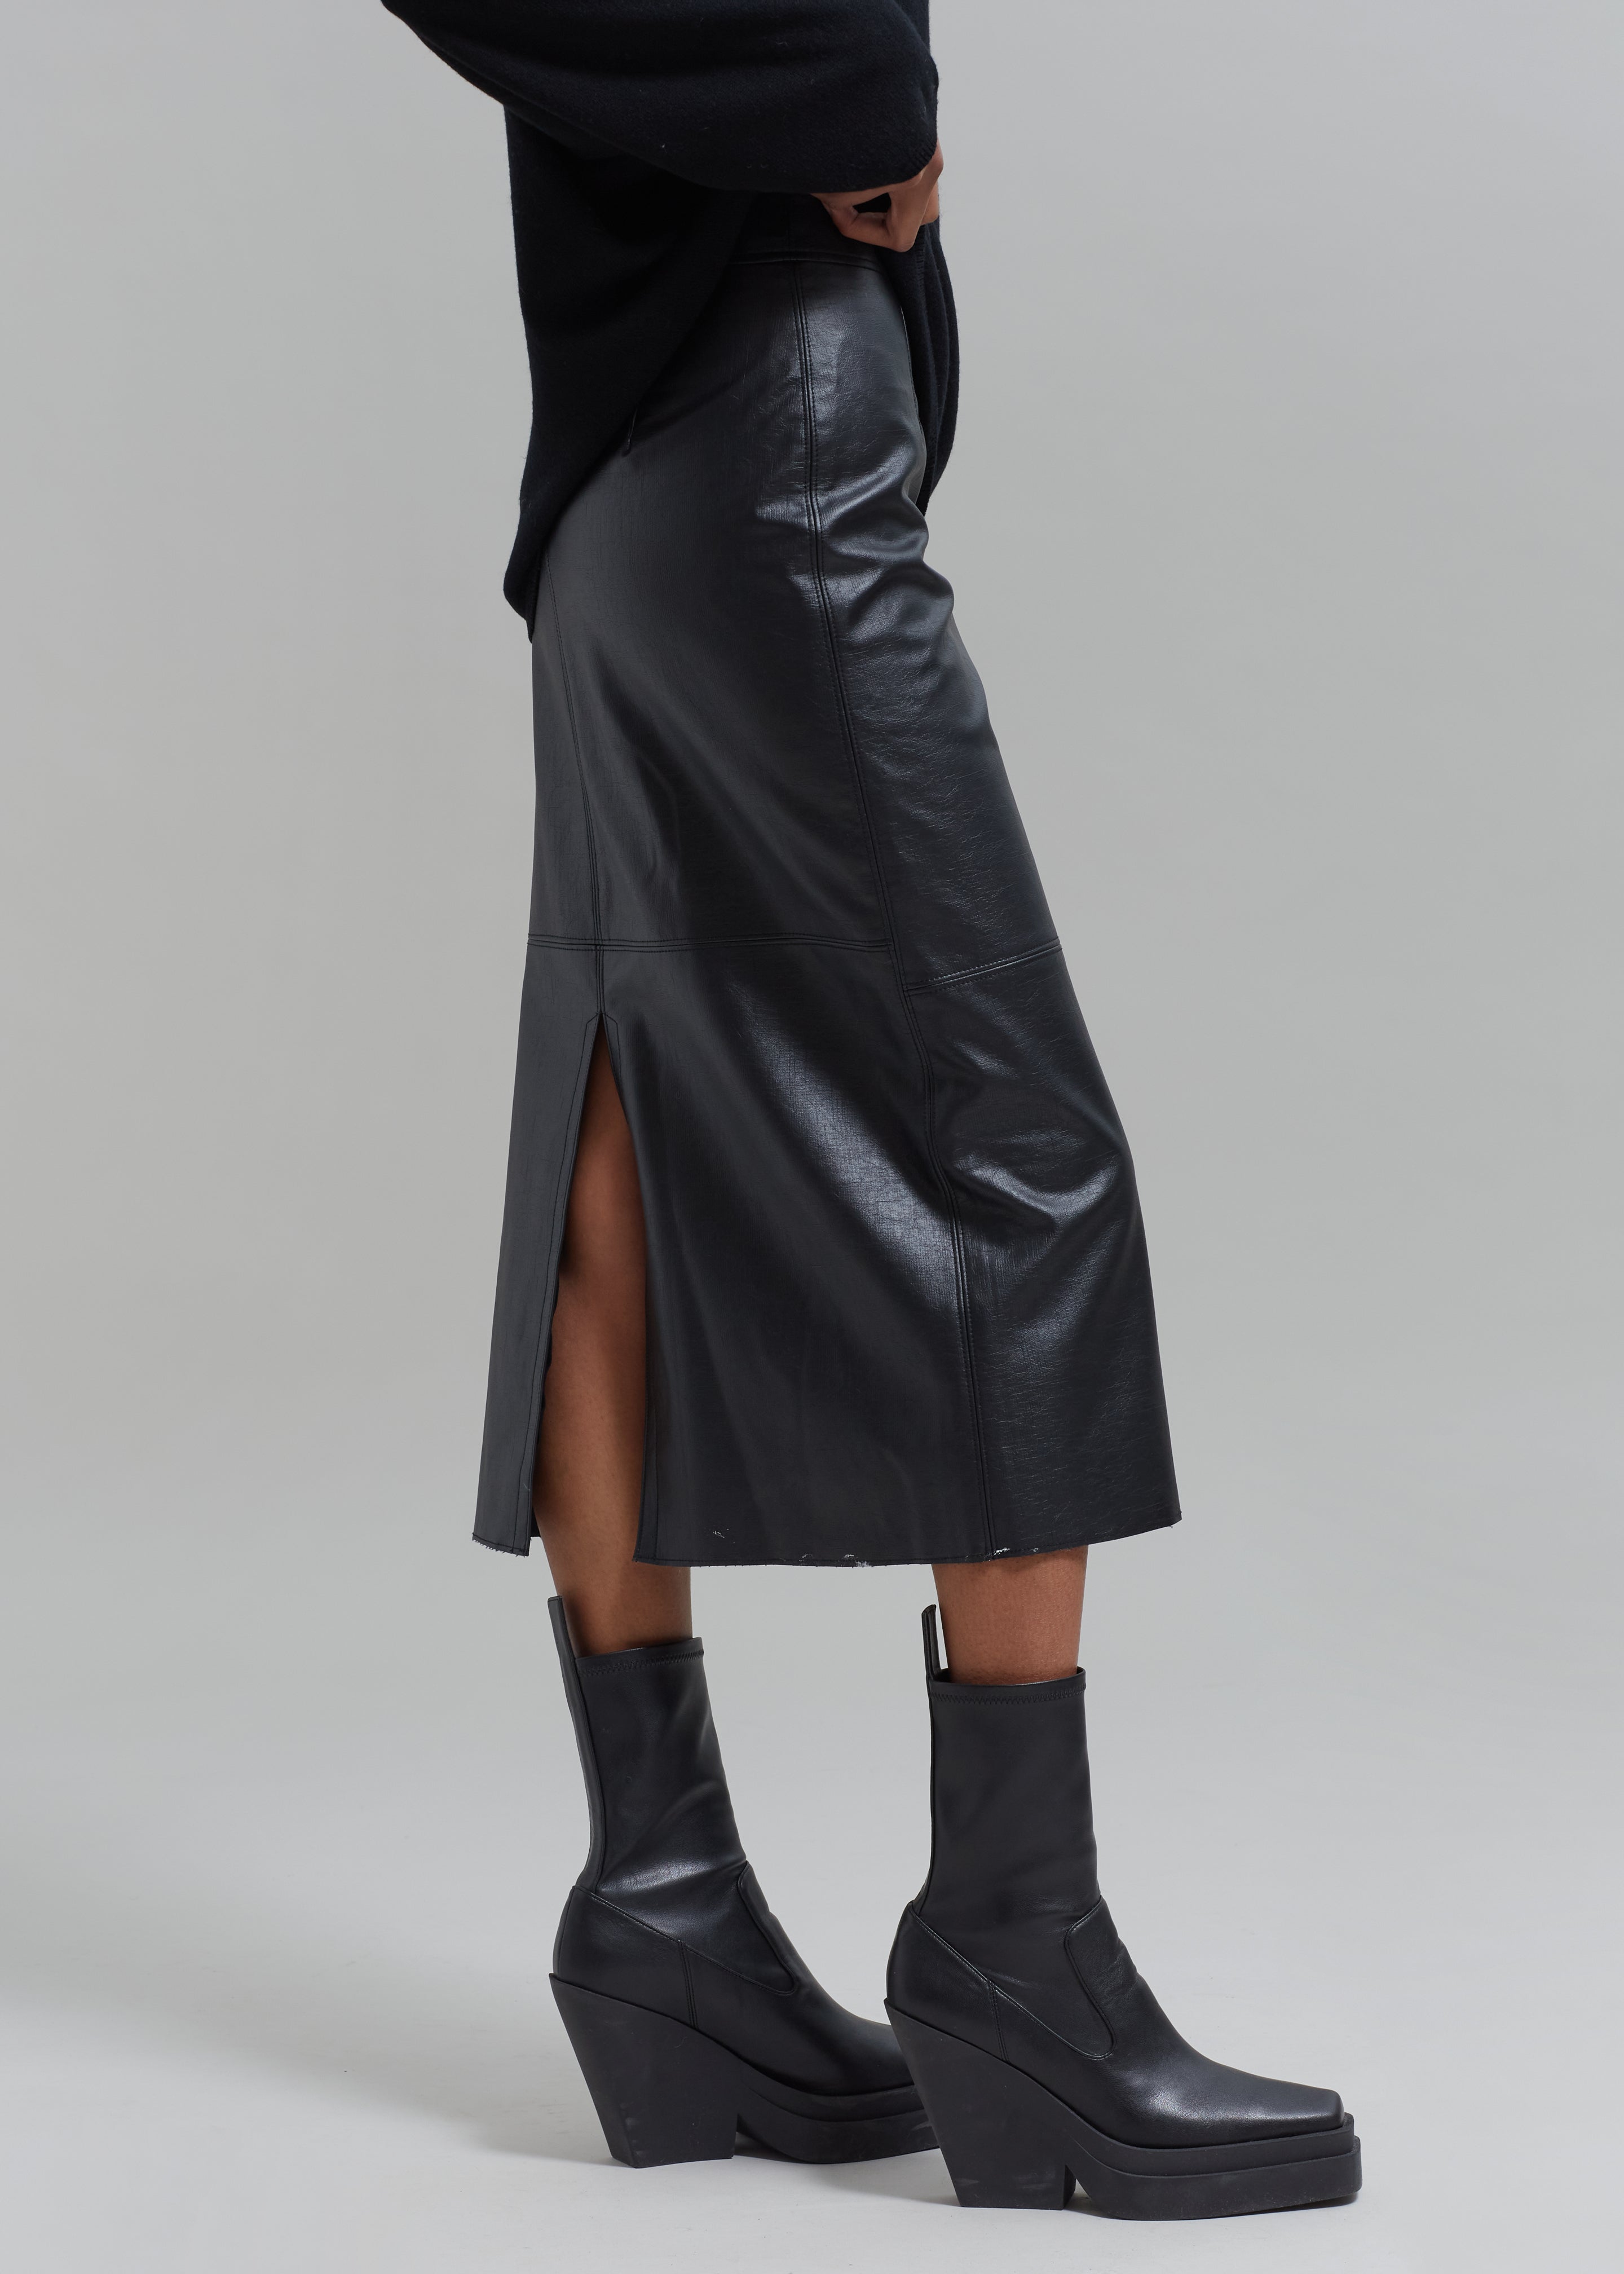 Manyne Faux Leather Pencil Skirt - Black - 3